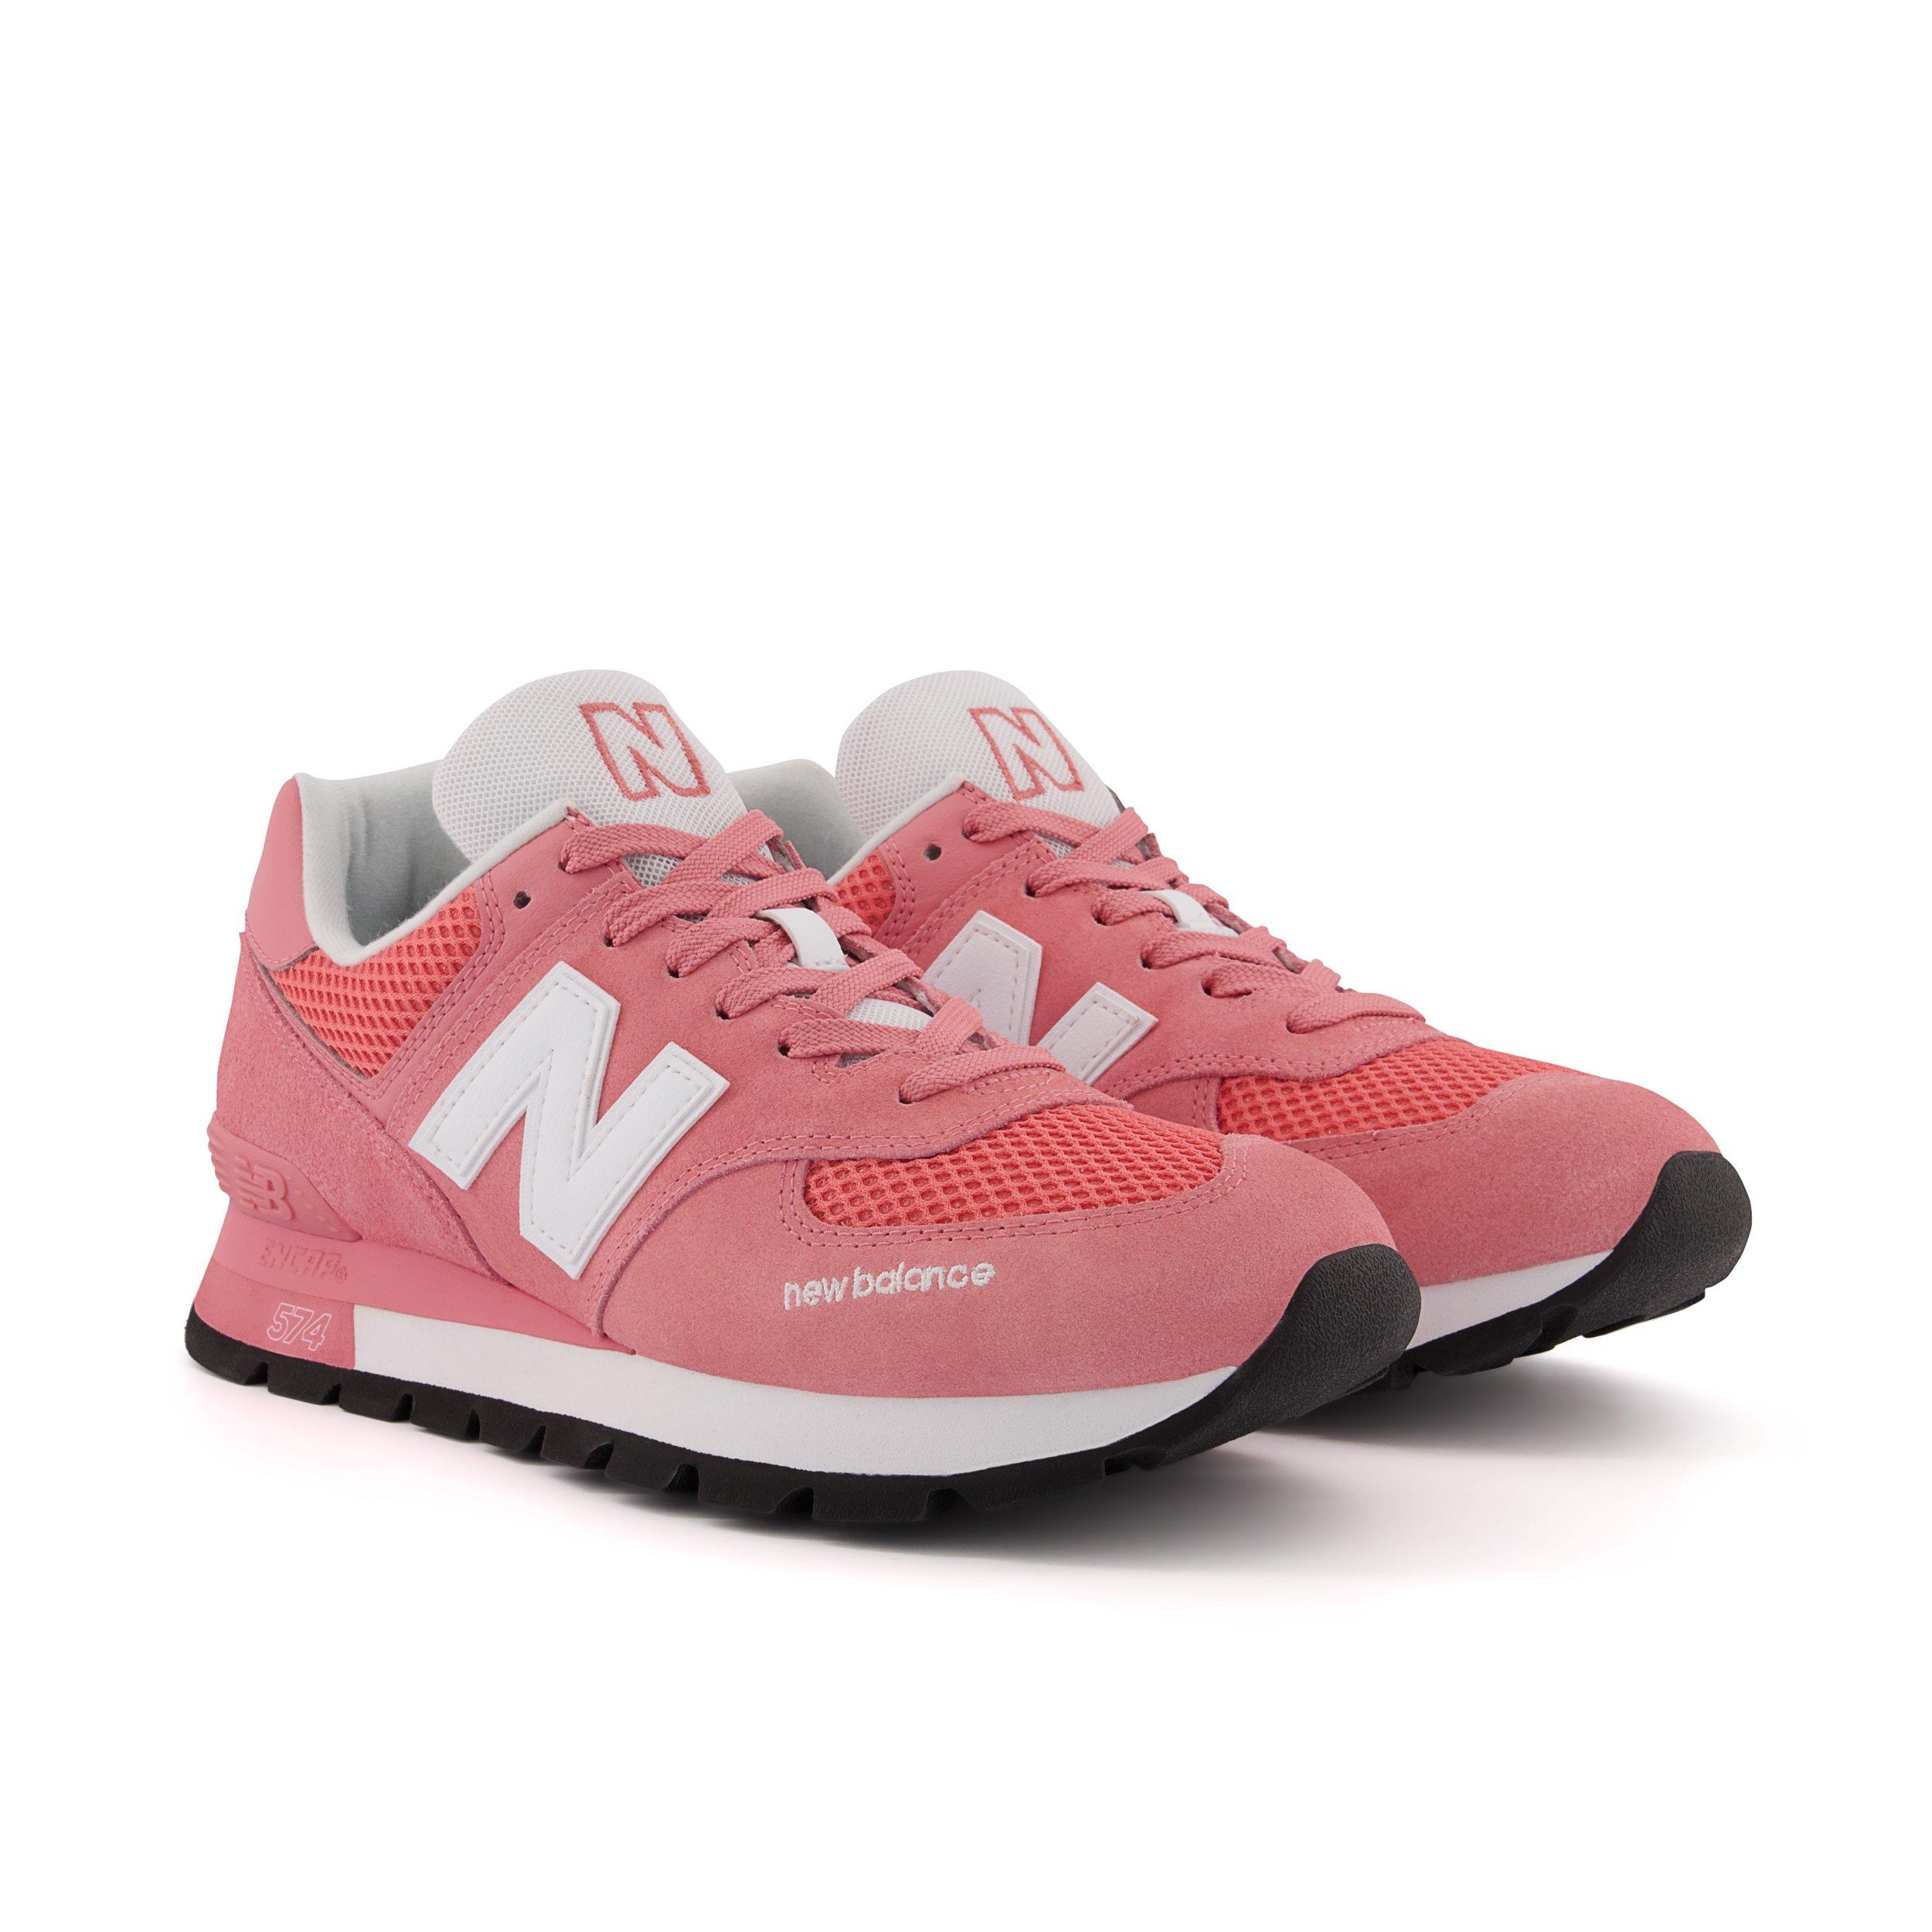 New 574 "Pink/White" Men's Shoe